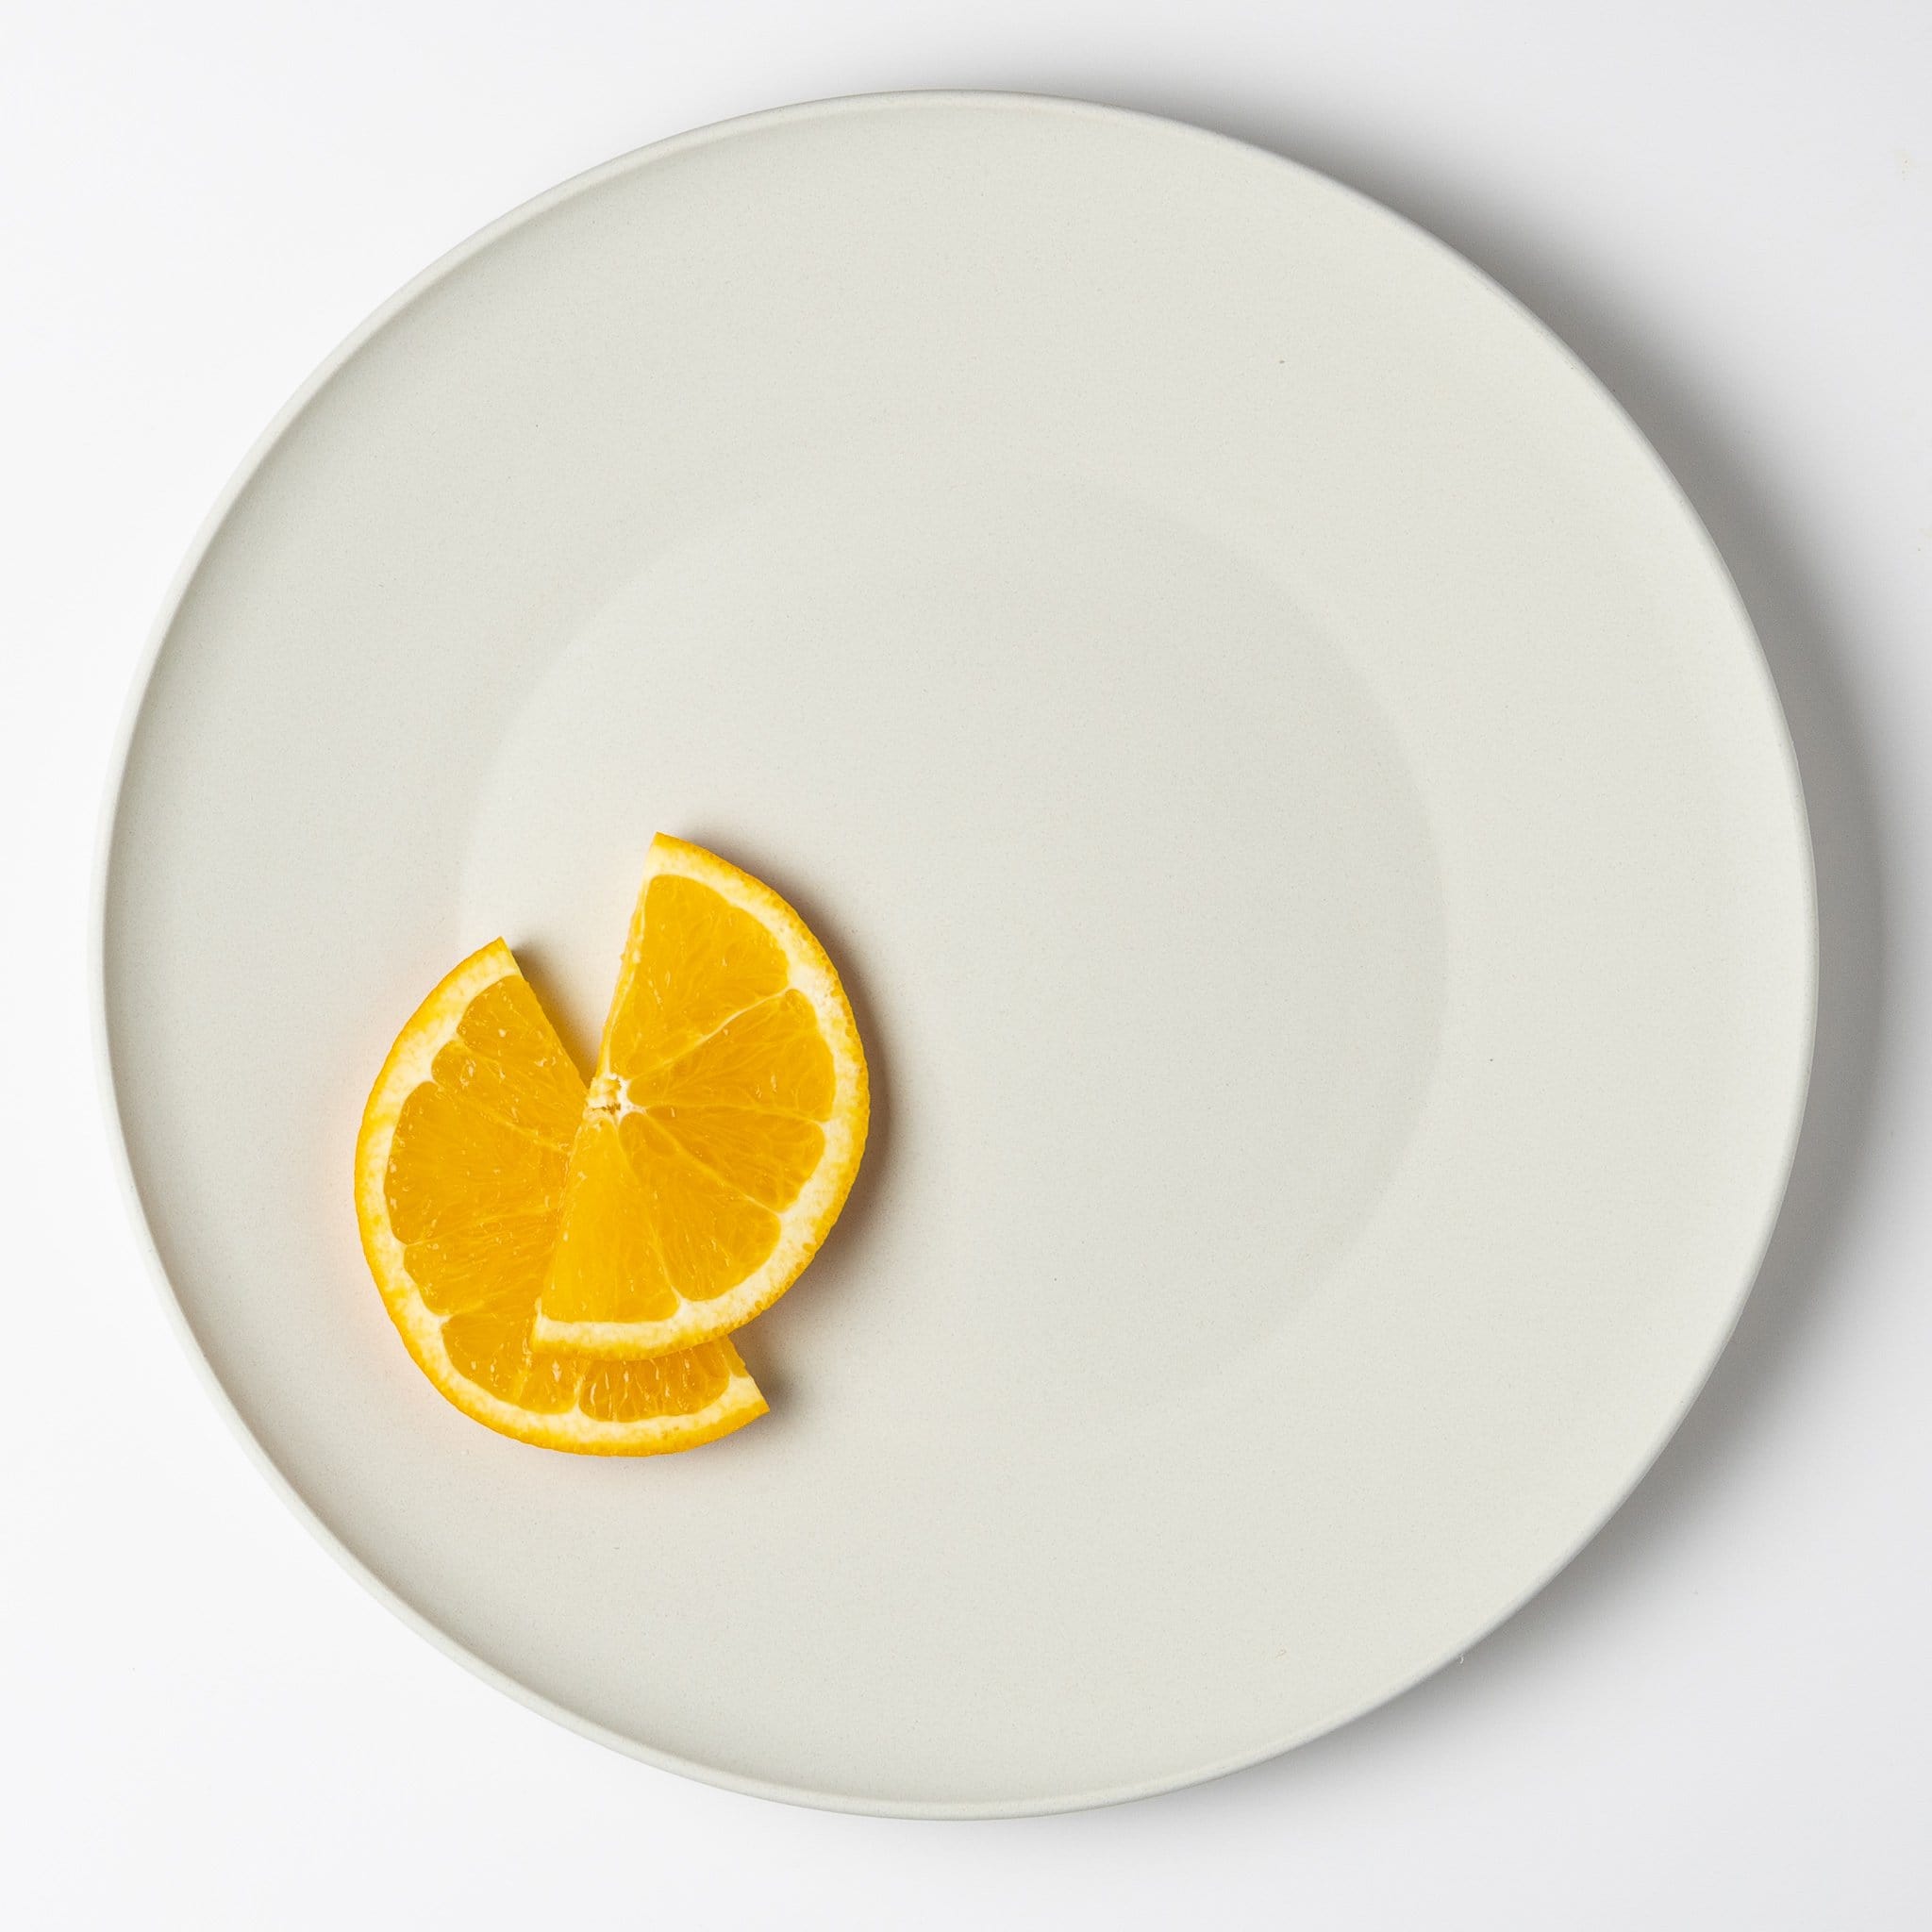 Orange slices on off-white plate